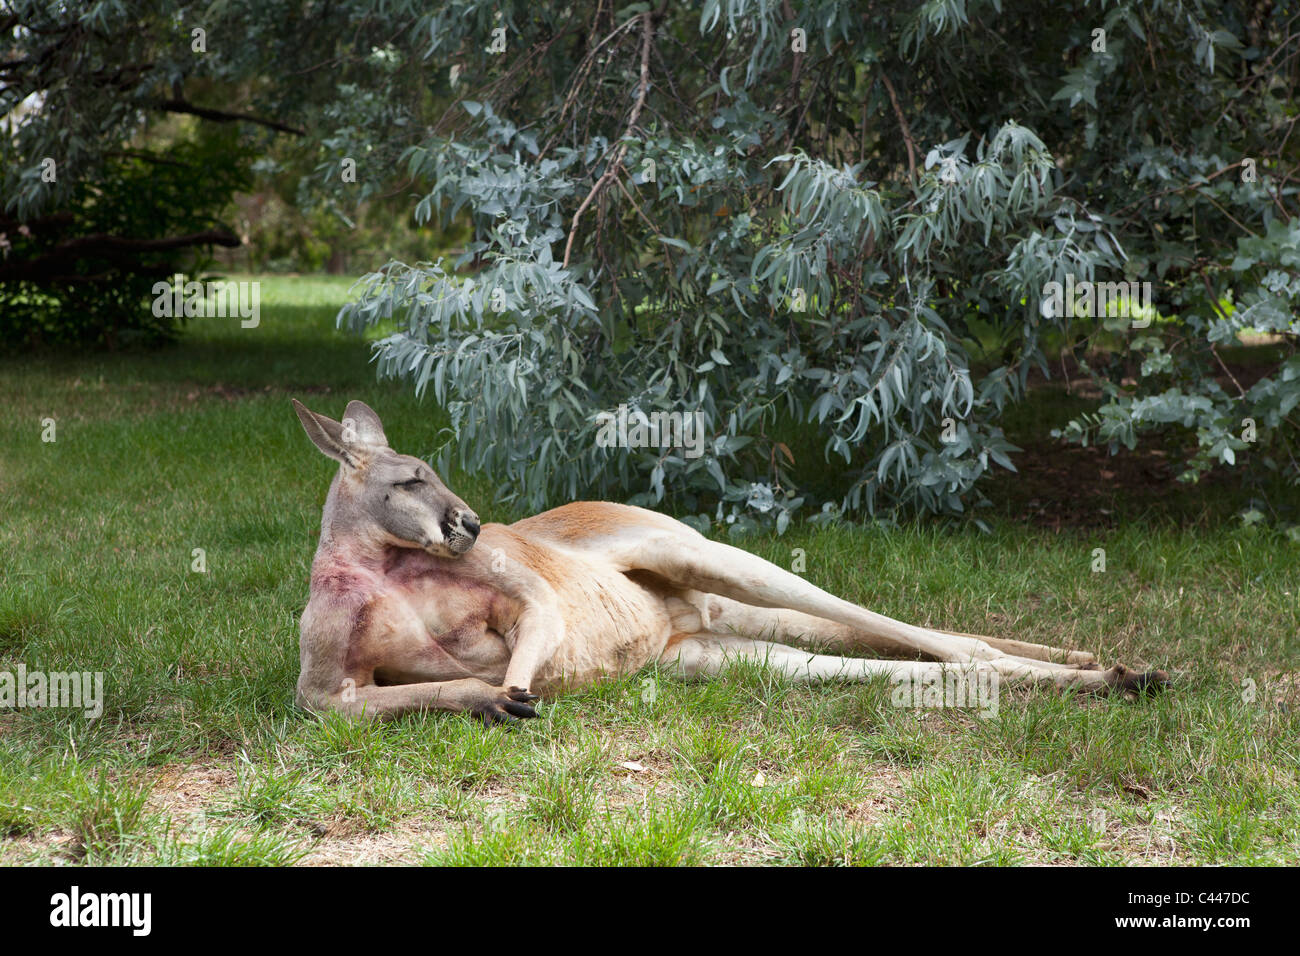 A Kangaroo lying down Stock Photo